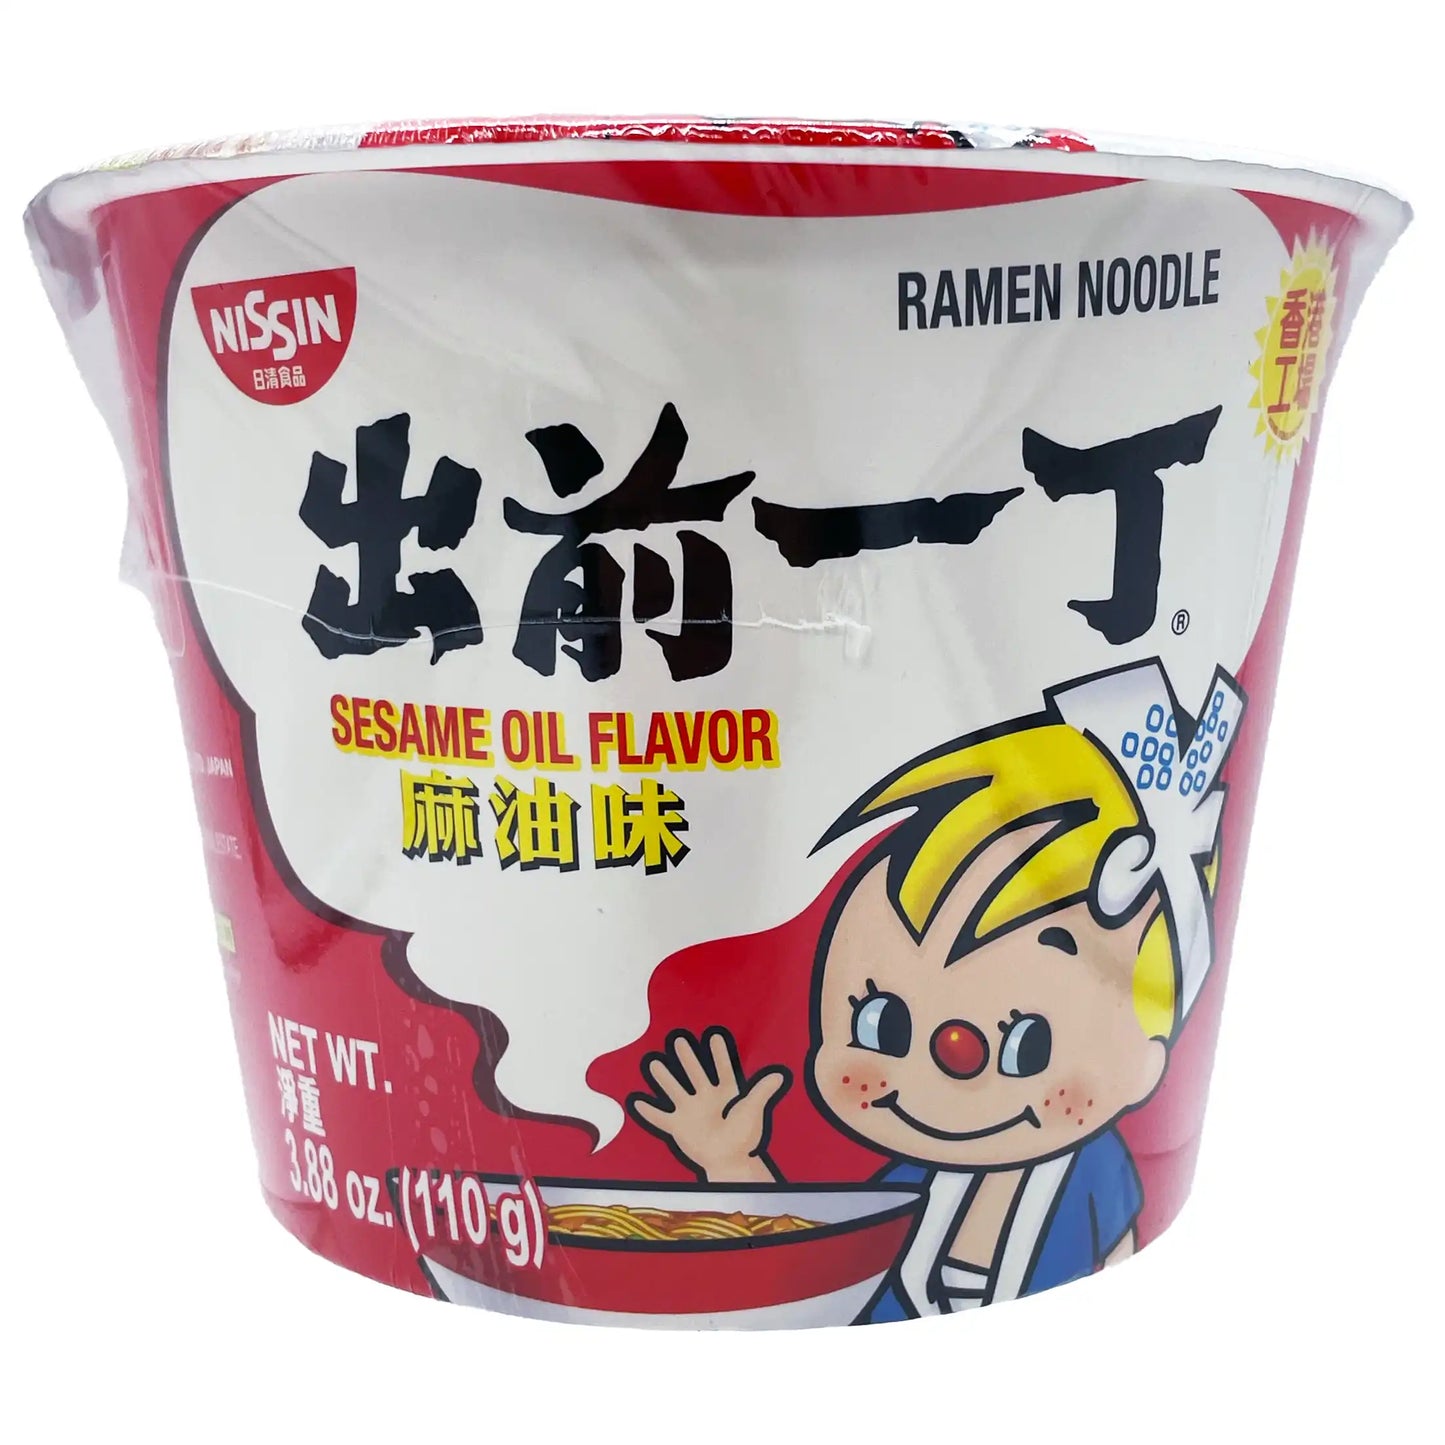 Nissin Damae Ramen Bowl Sesame Oil Flavor 3.88 oz